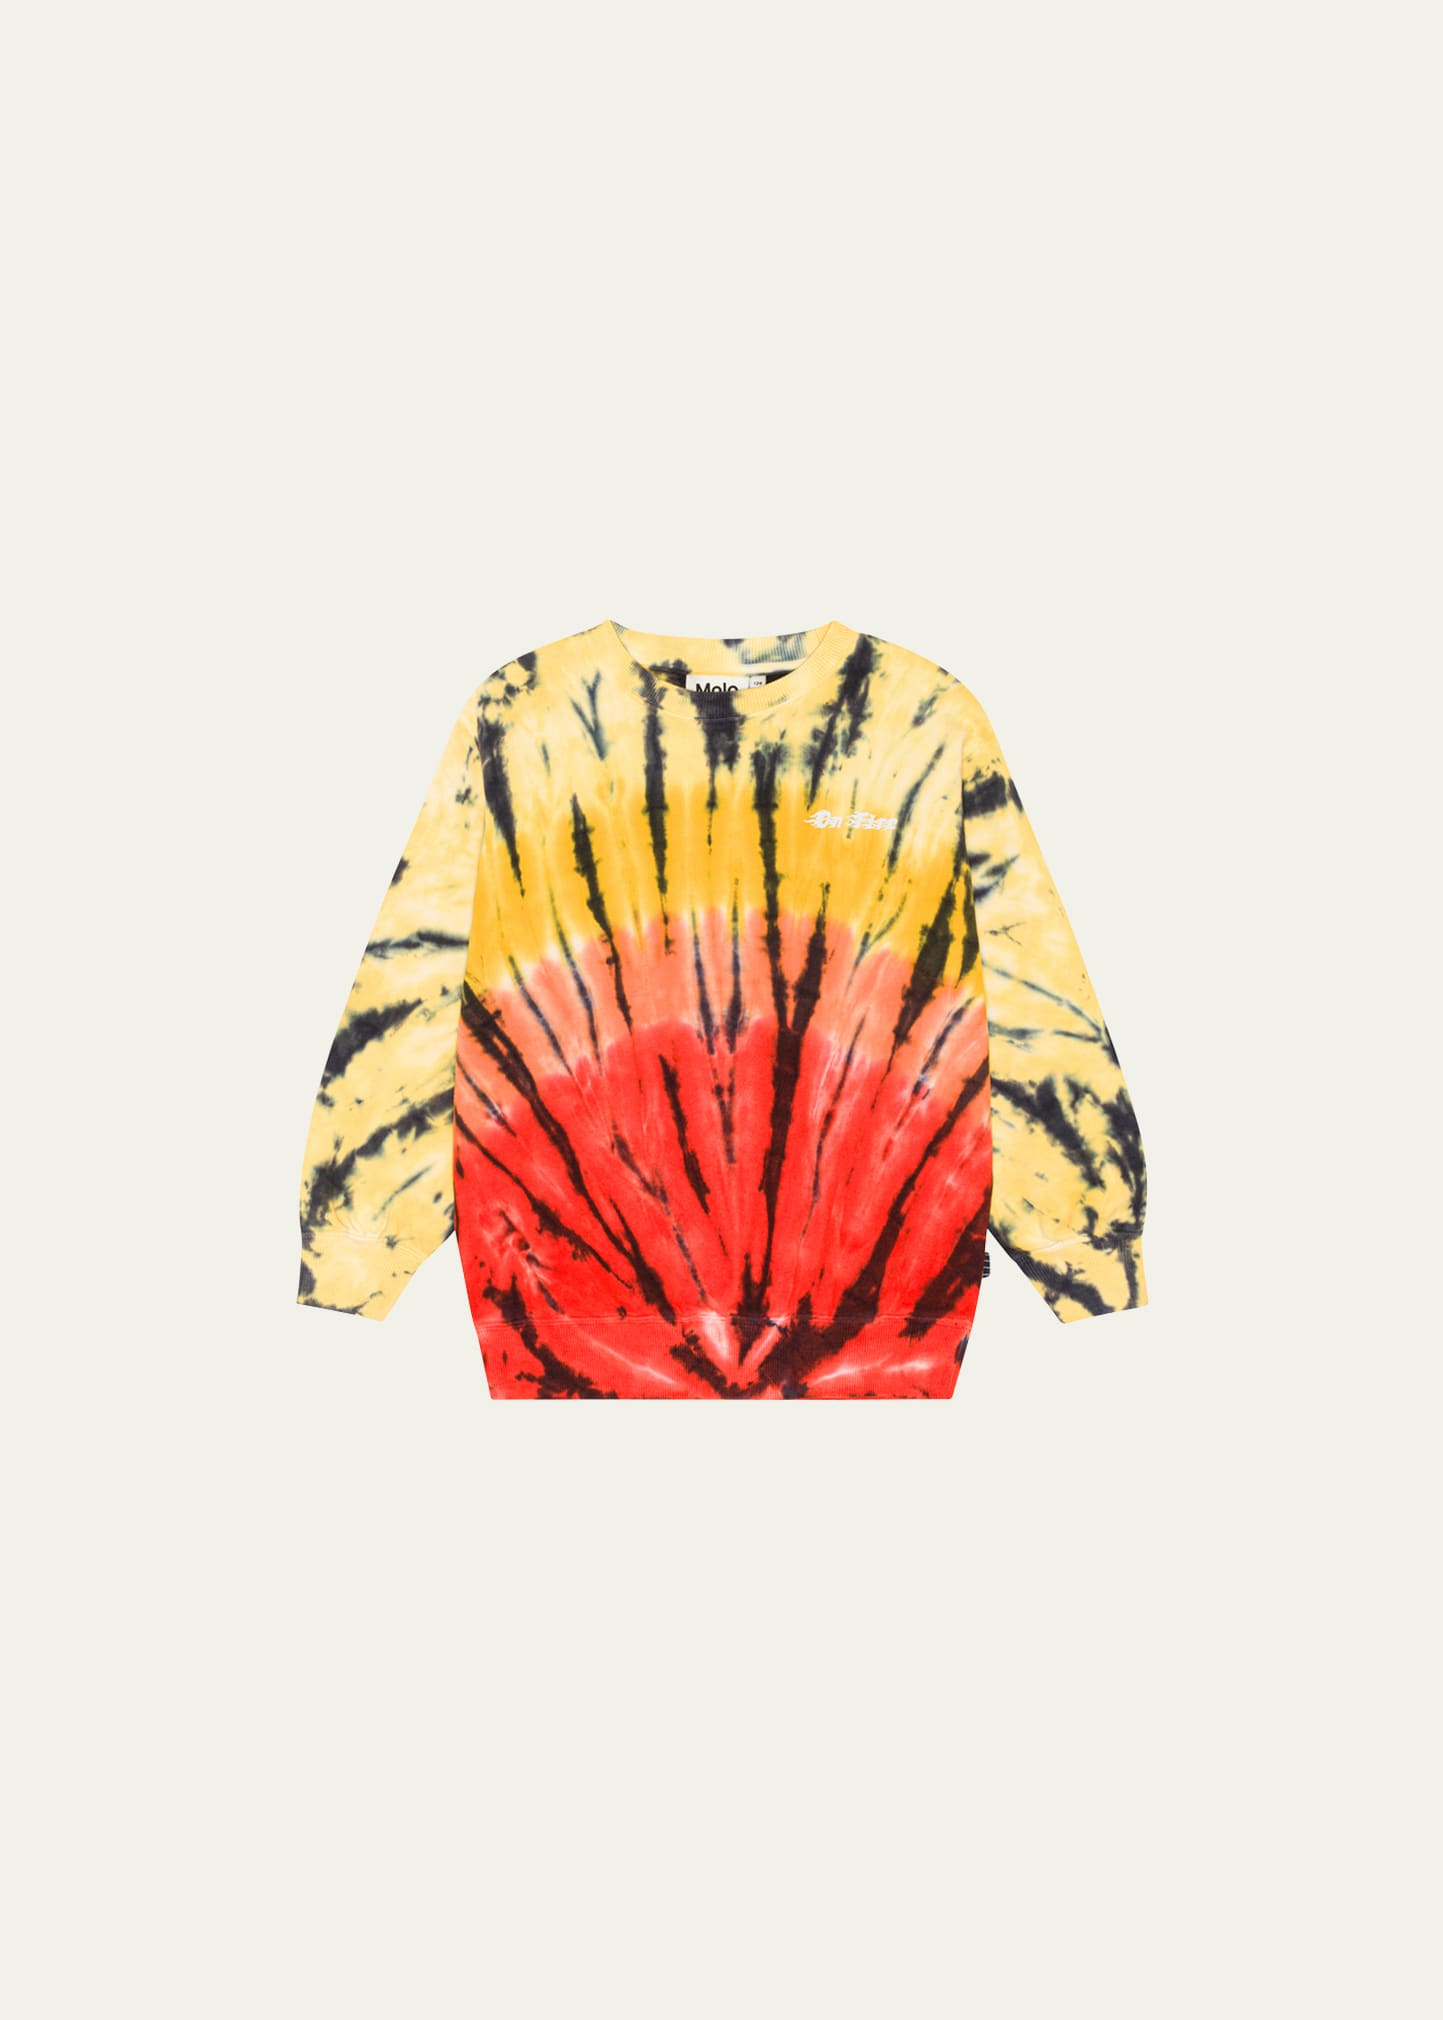 Boy's Monti Flames Graphic Sweatshirt, Size 8-12